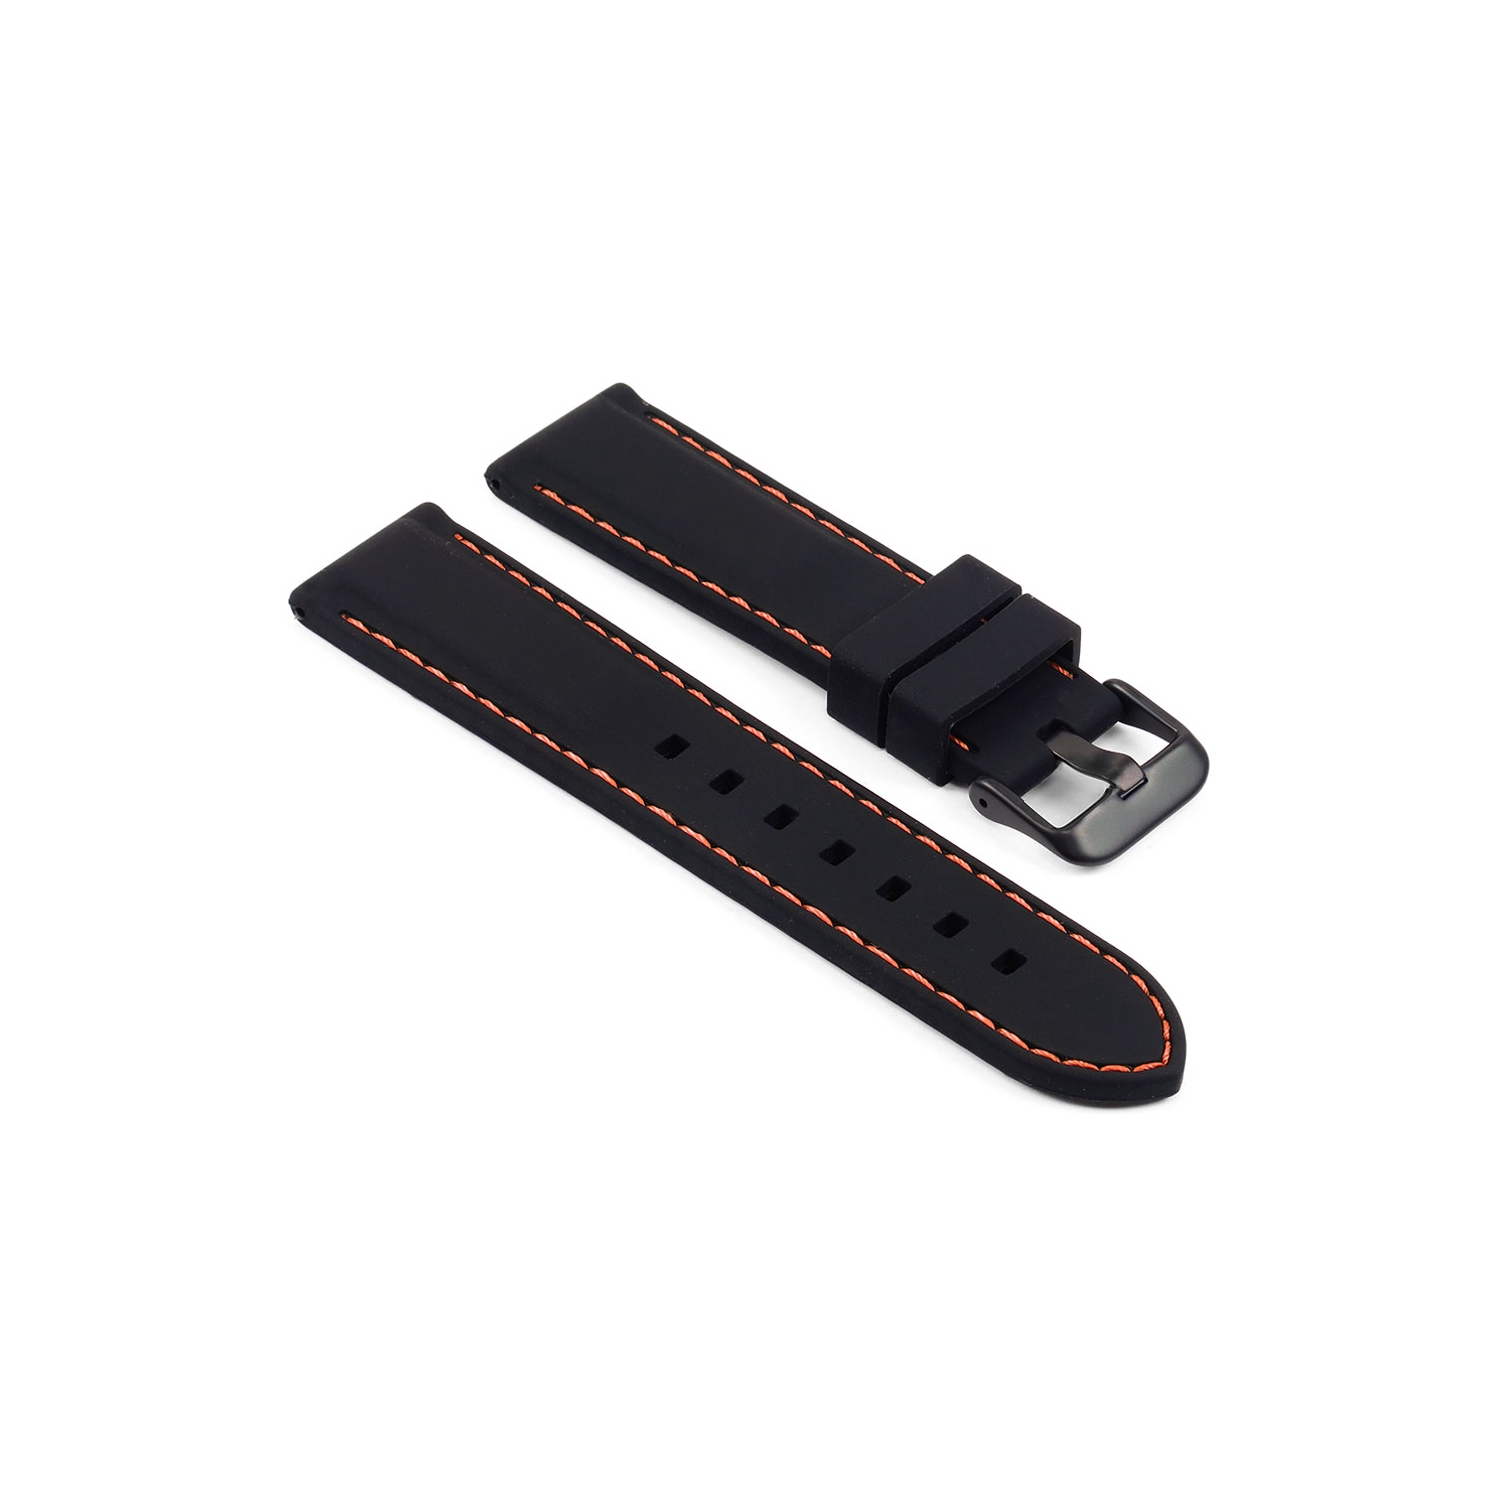 StrapsCo Silicone Rubber 22mm Watch Band Strap with Stitching for LG G Watch W100 - Black & Orange (Black Buckle)